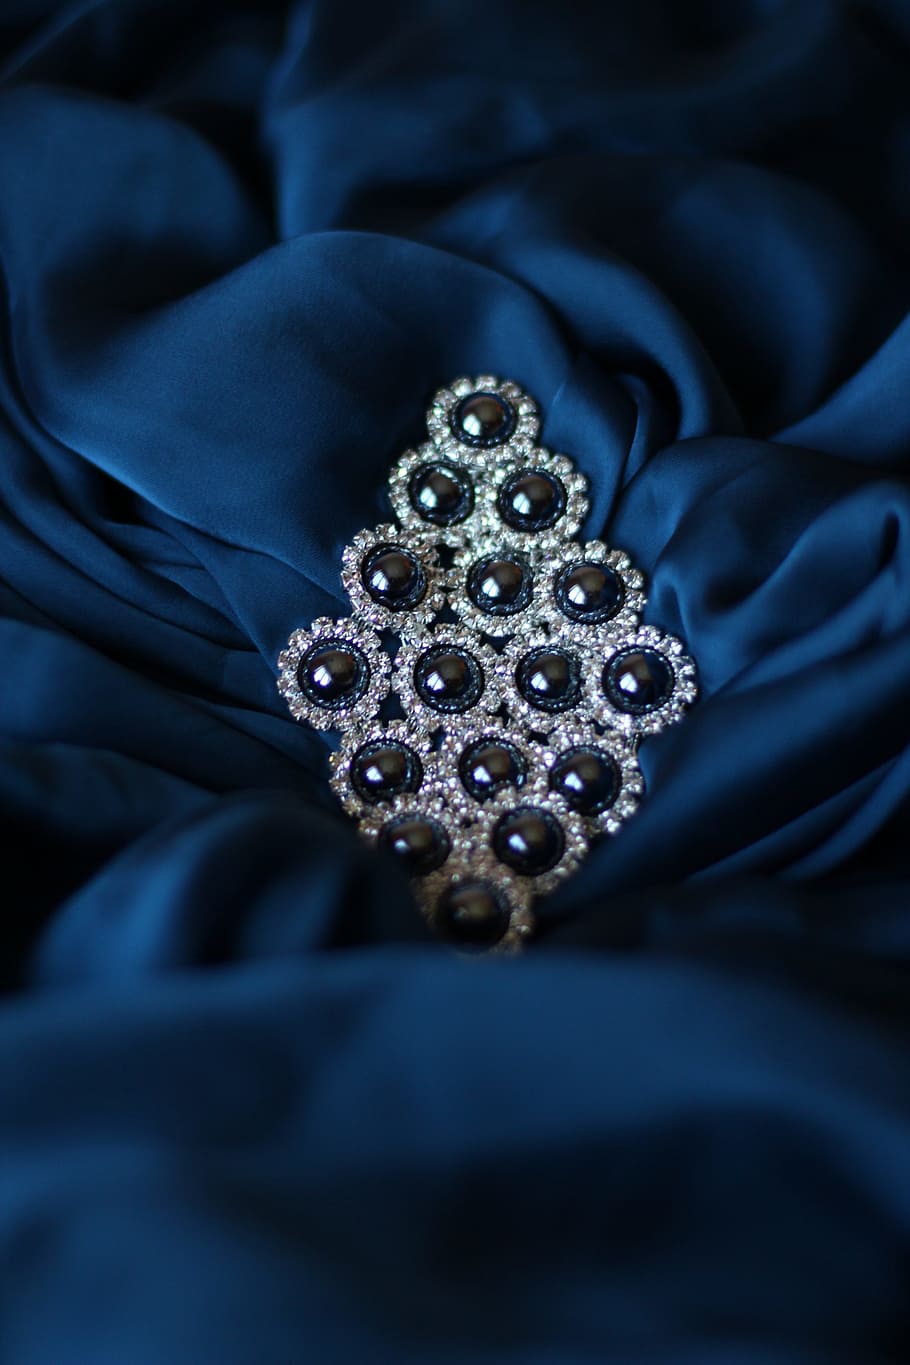 Ornamento, seda, azul, diamante - pedra preciosa, luxo, jóias, riqueza, gema preciosa, pedra preciosa, dentro de casa